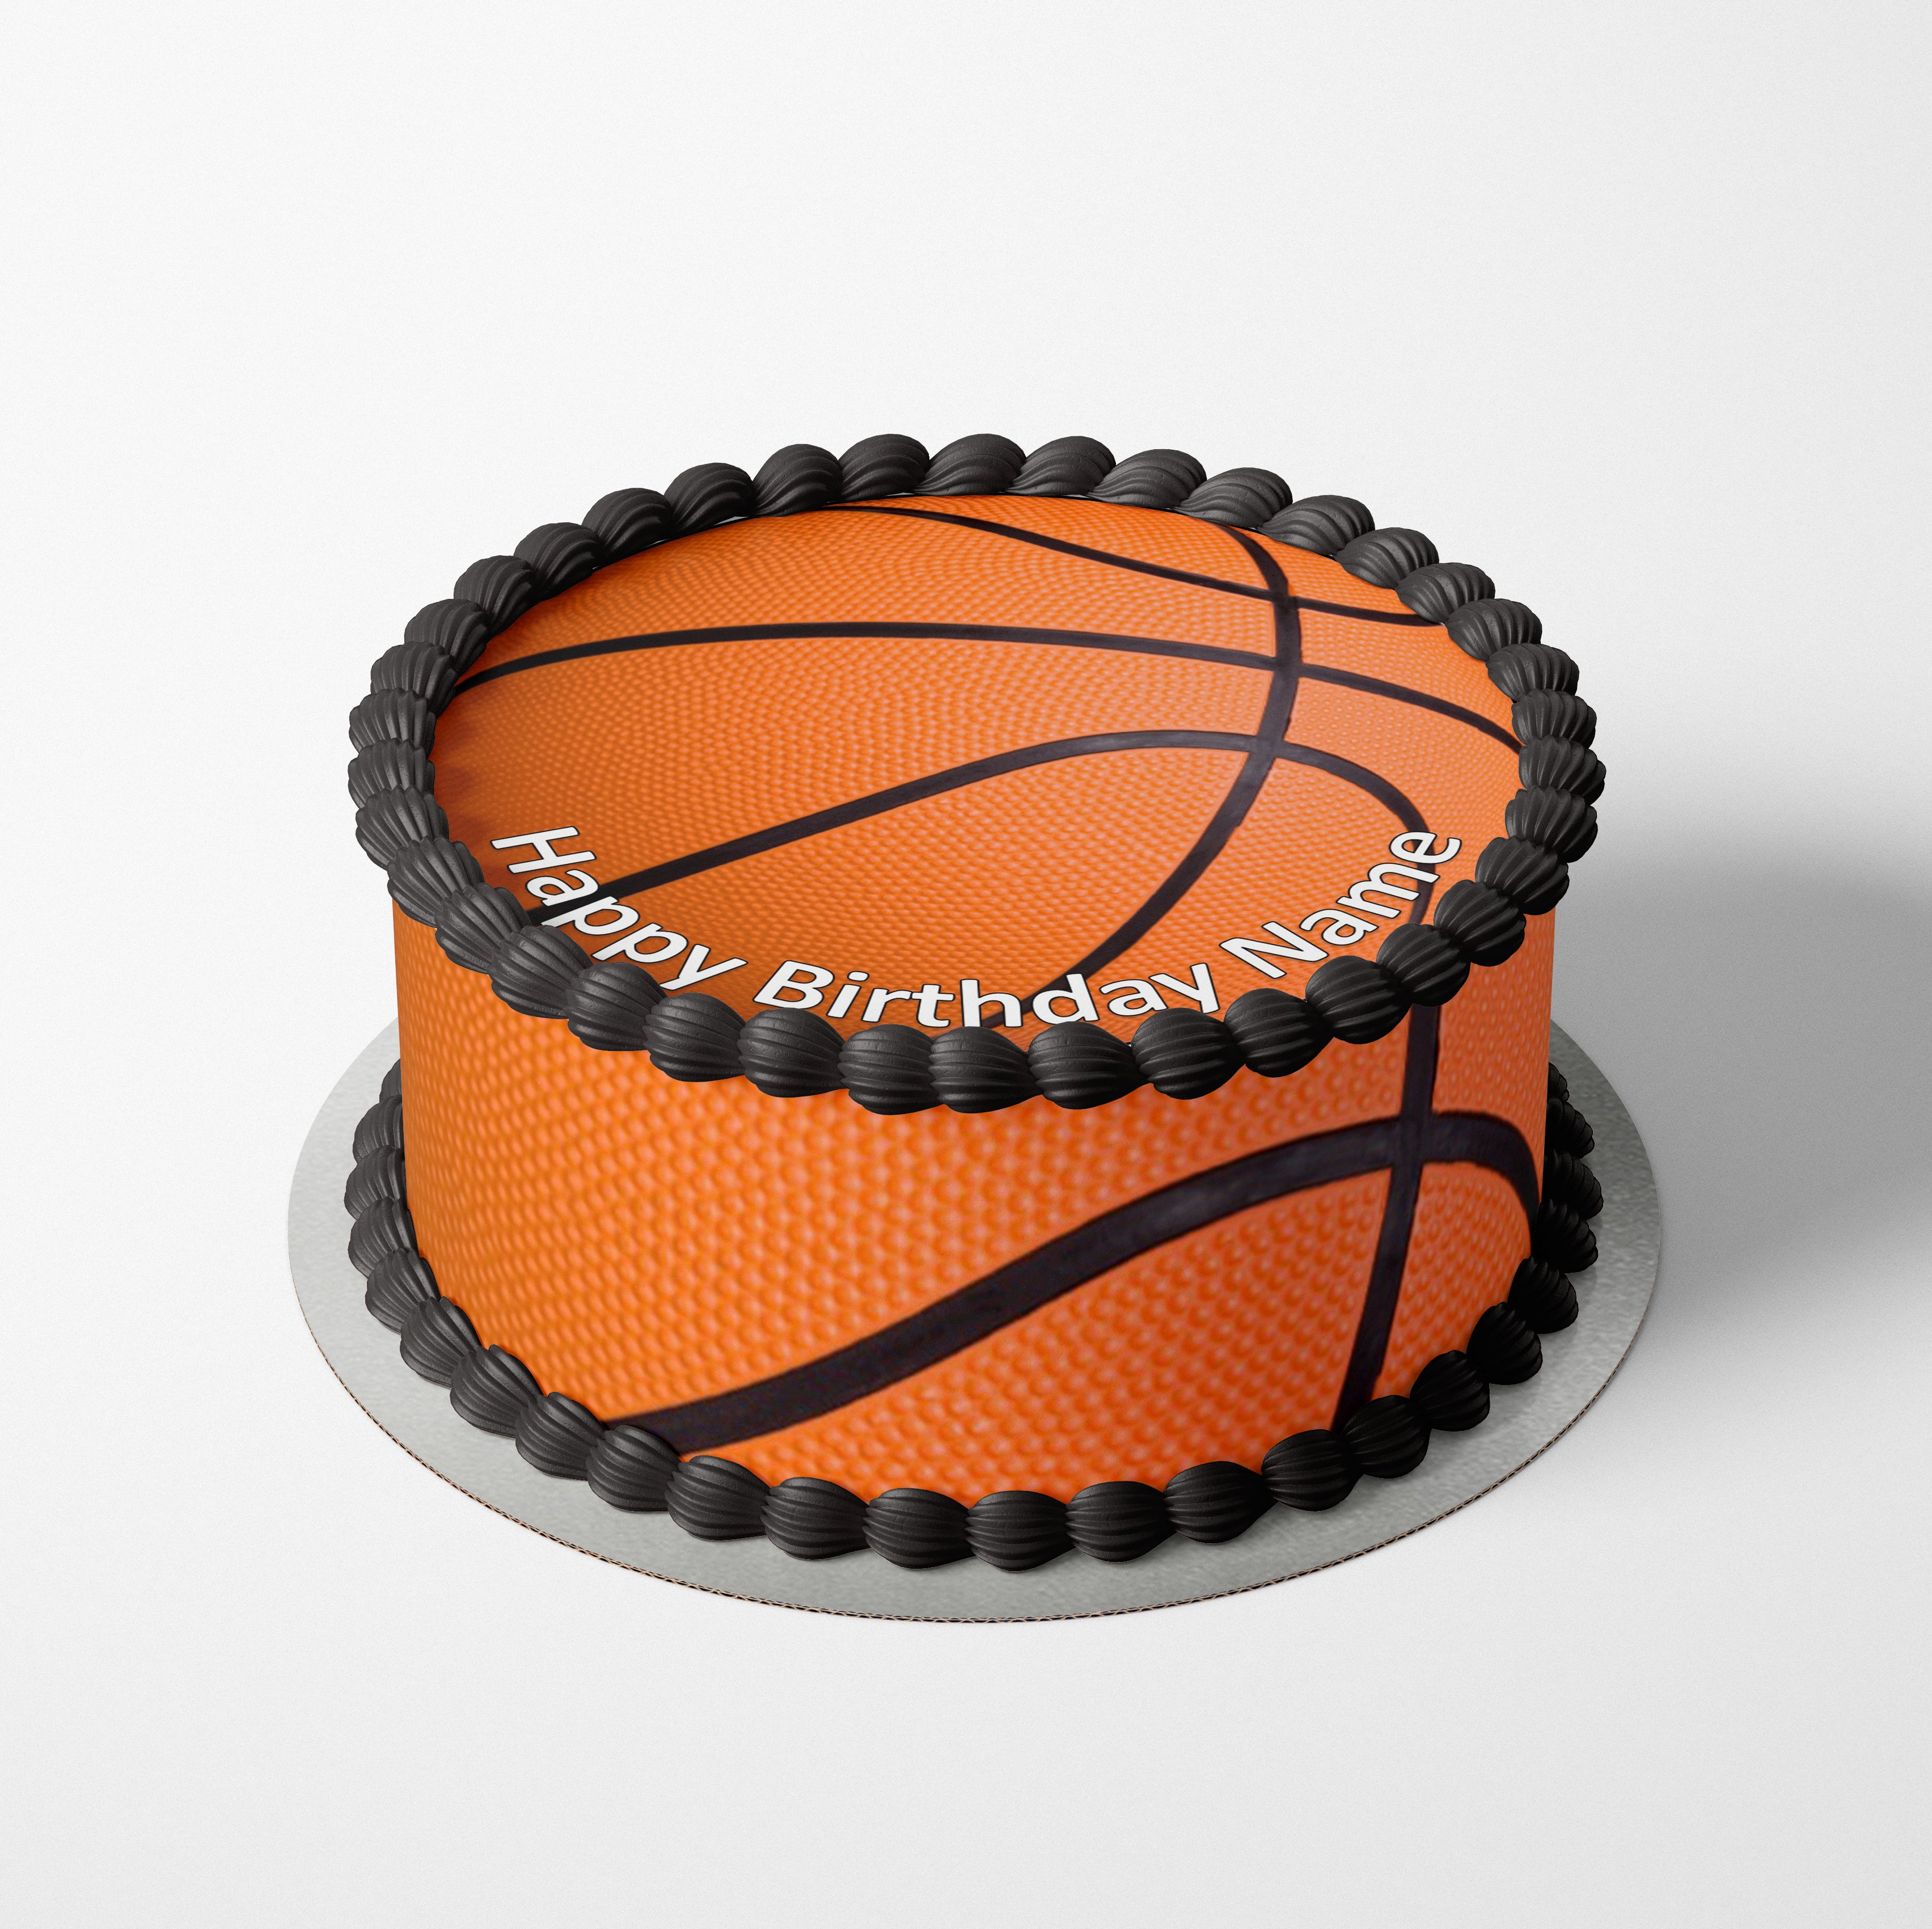 3D Basketball Cake - Wilton